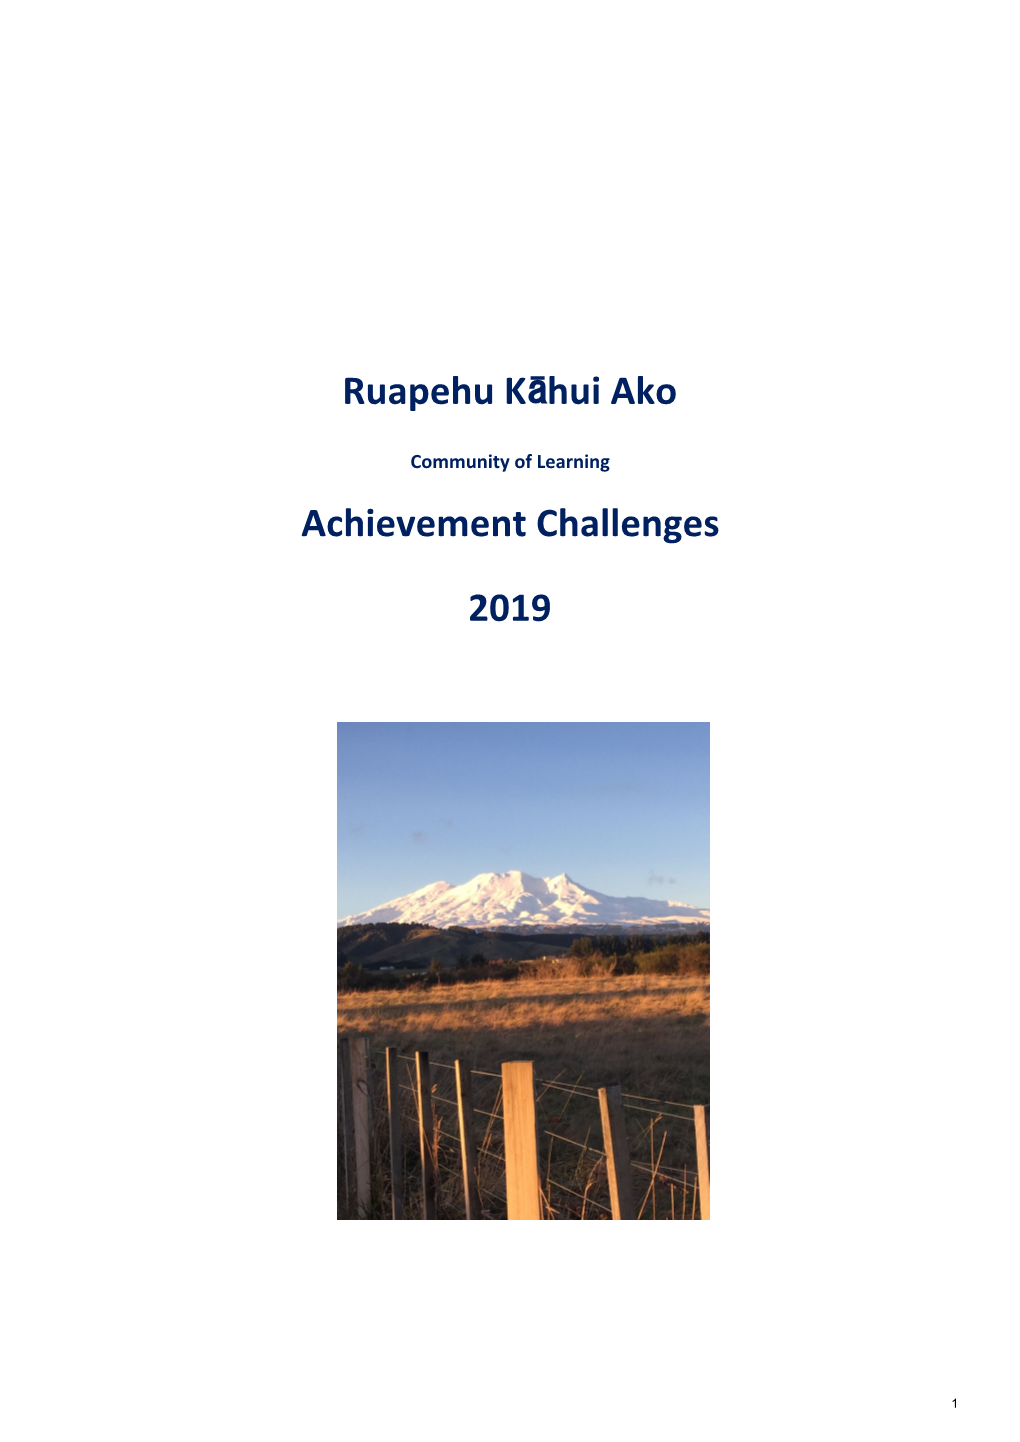 Ruapehu Kāhui Ako Achievement Challenges 2019